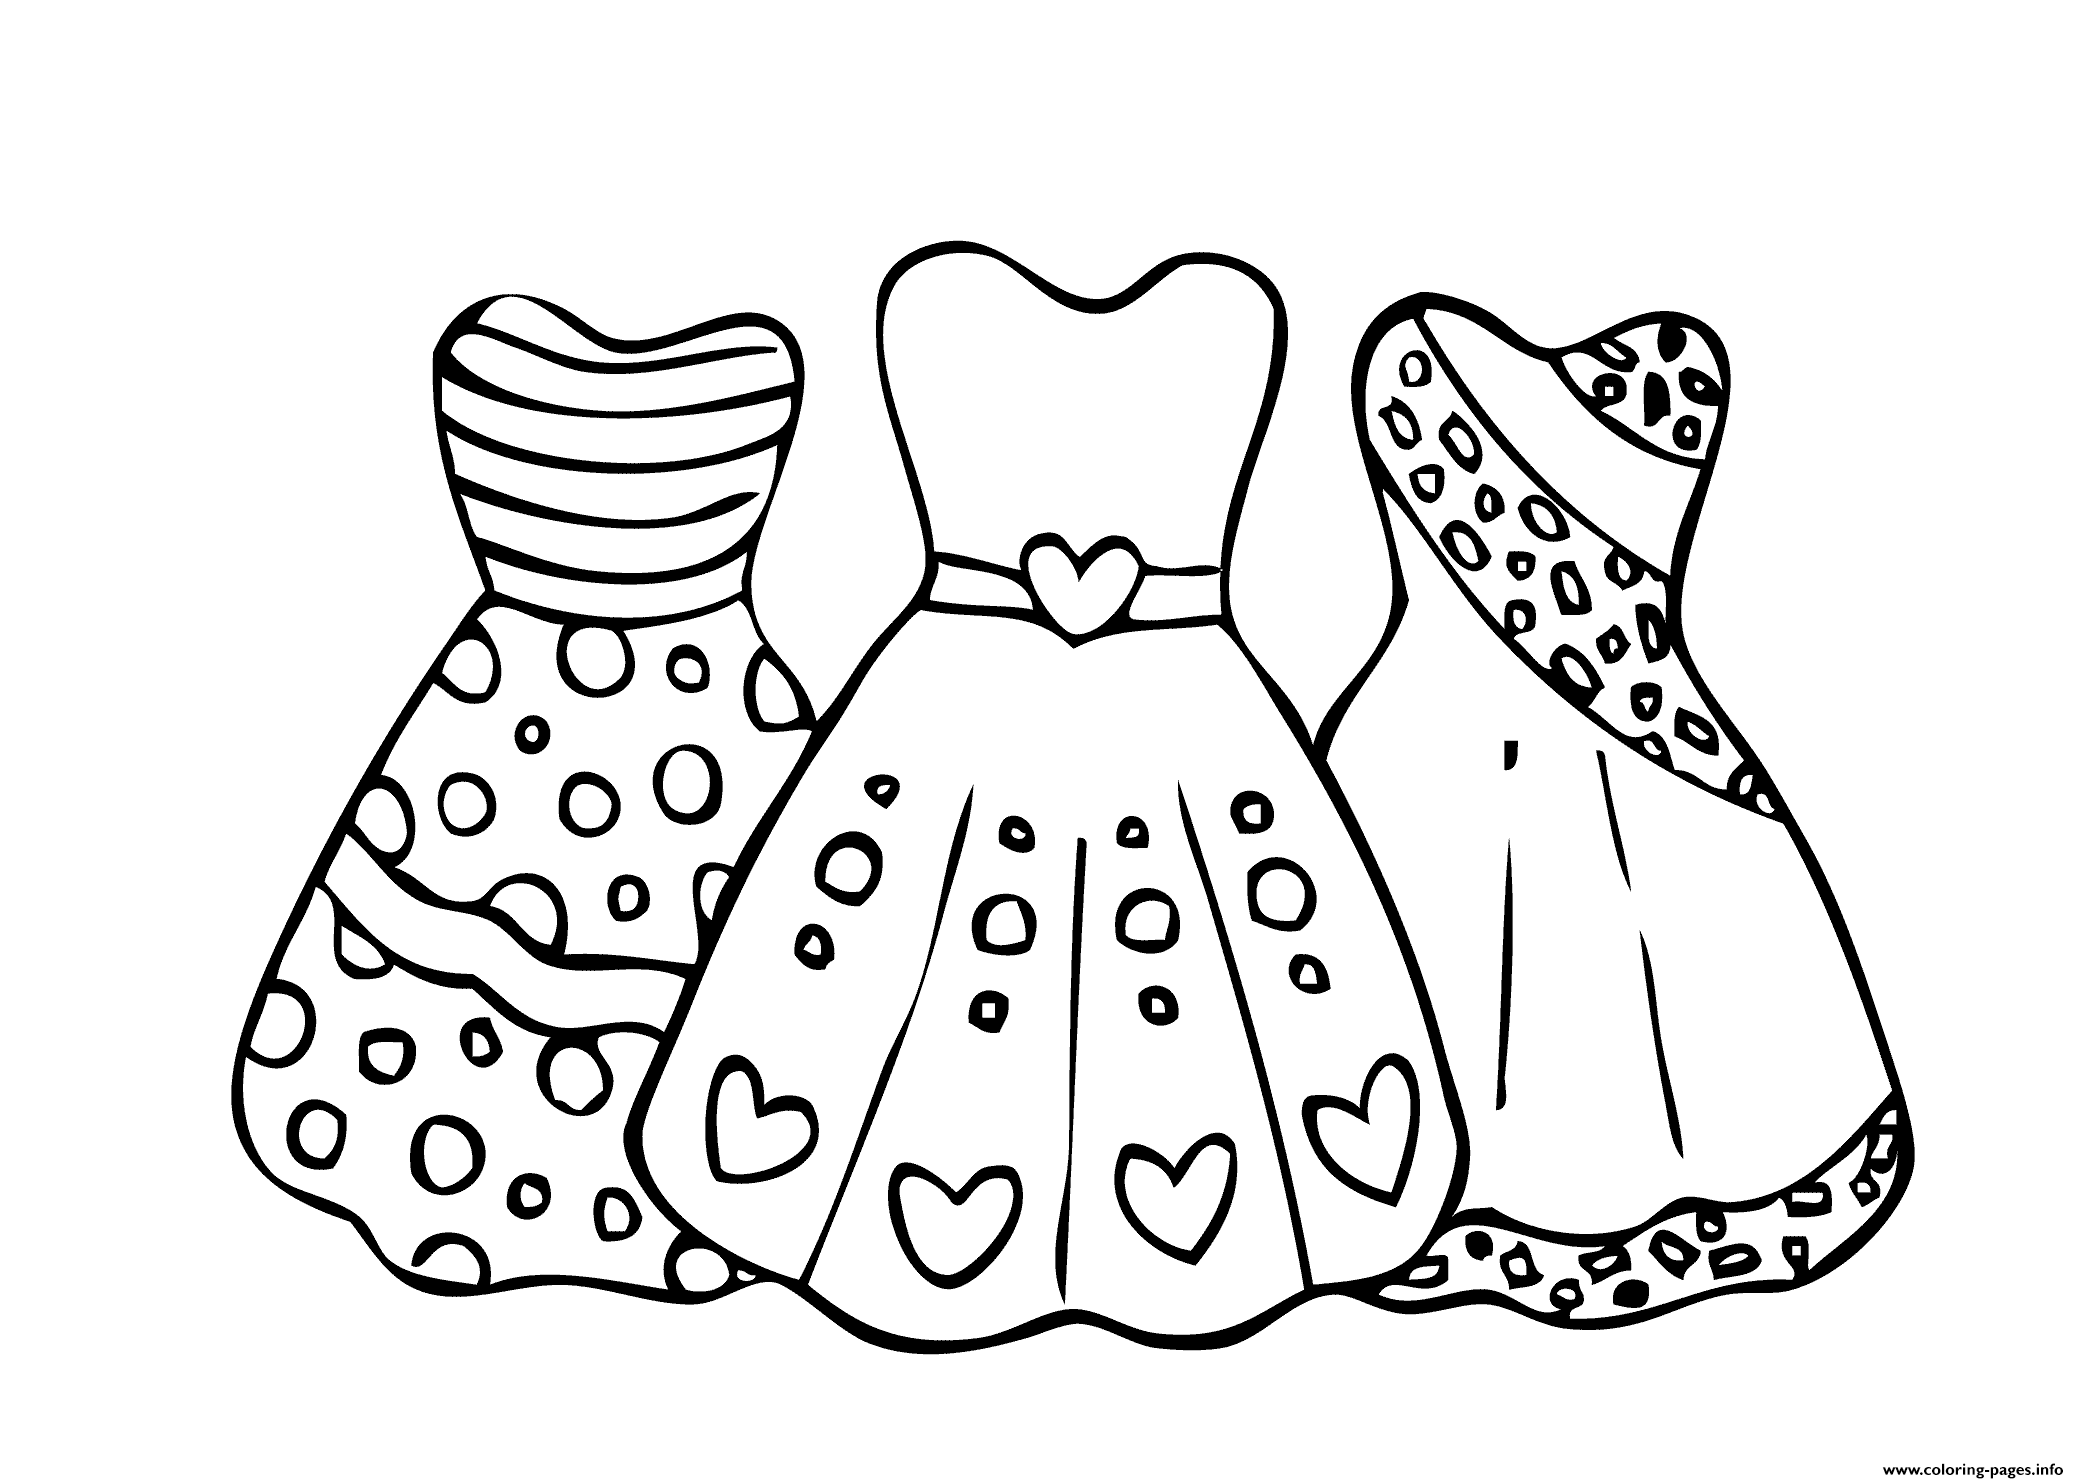 Three Dress coloring